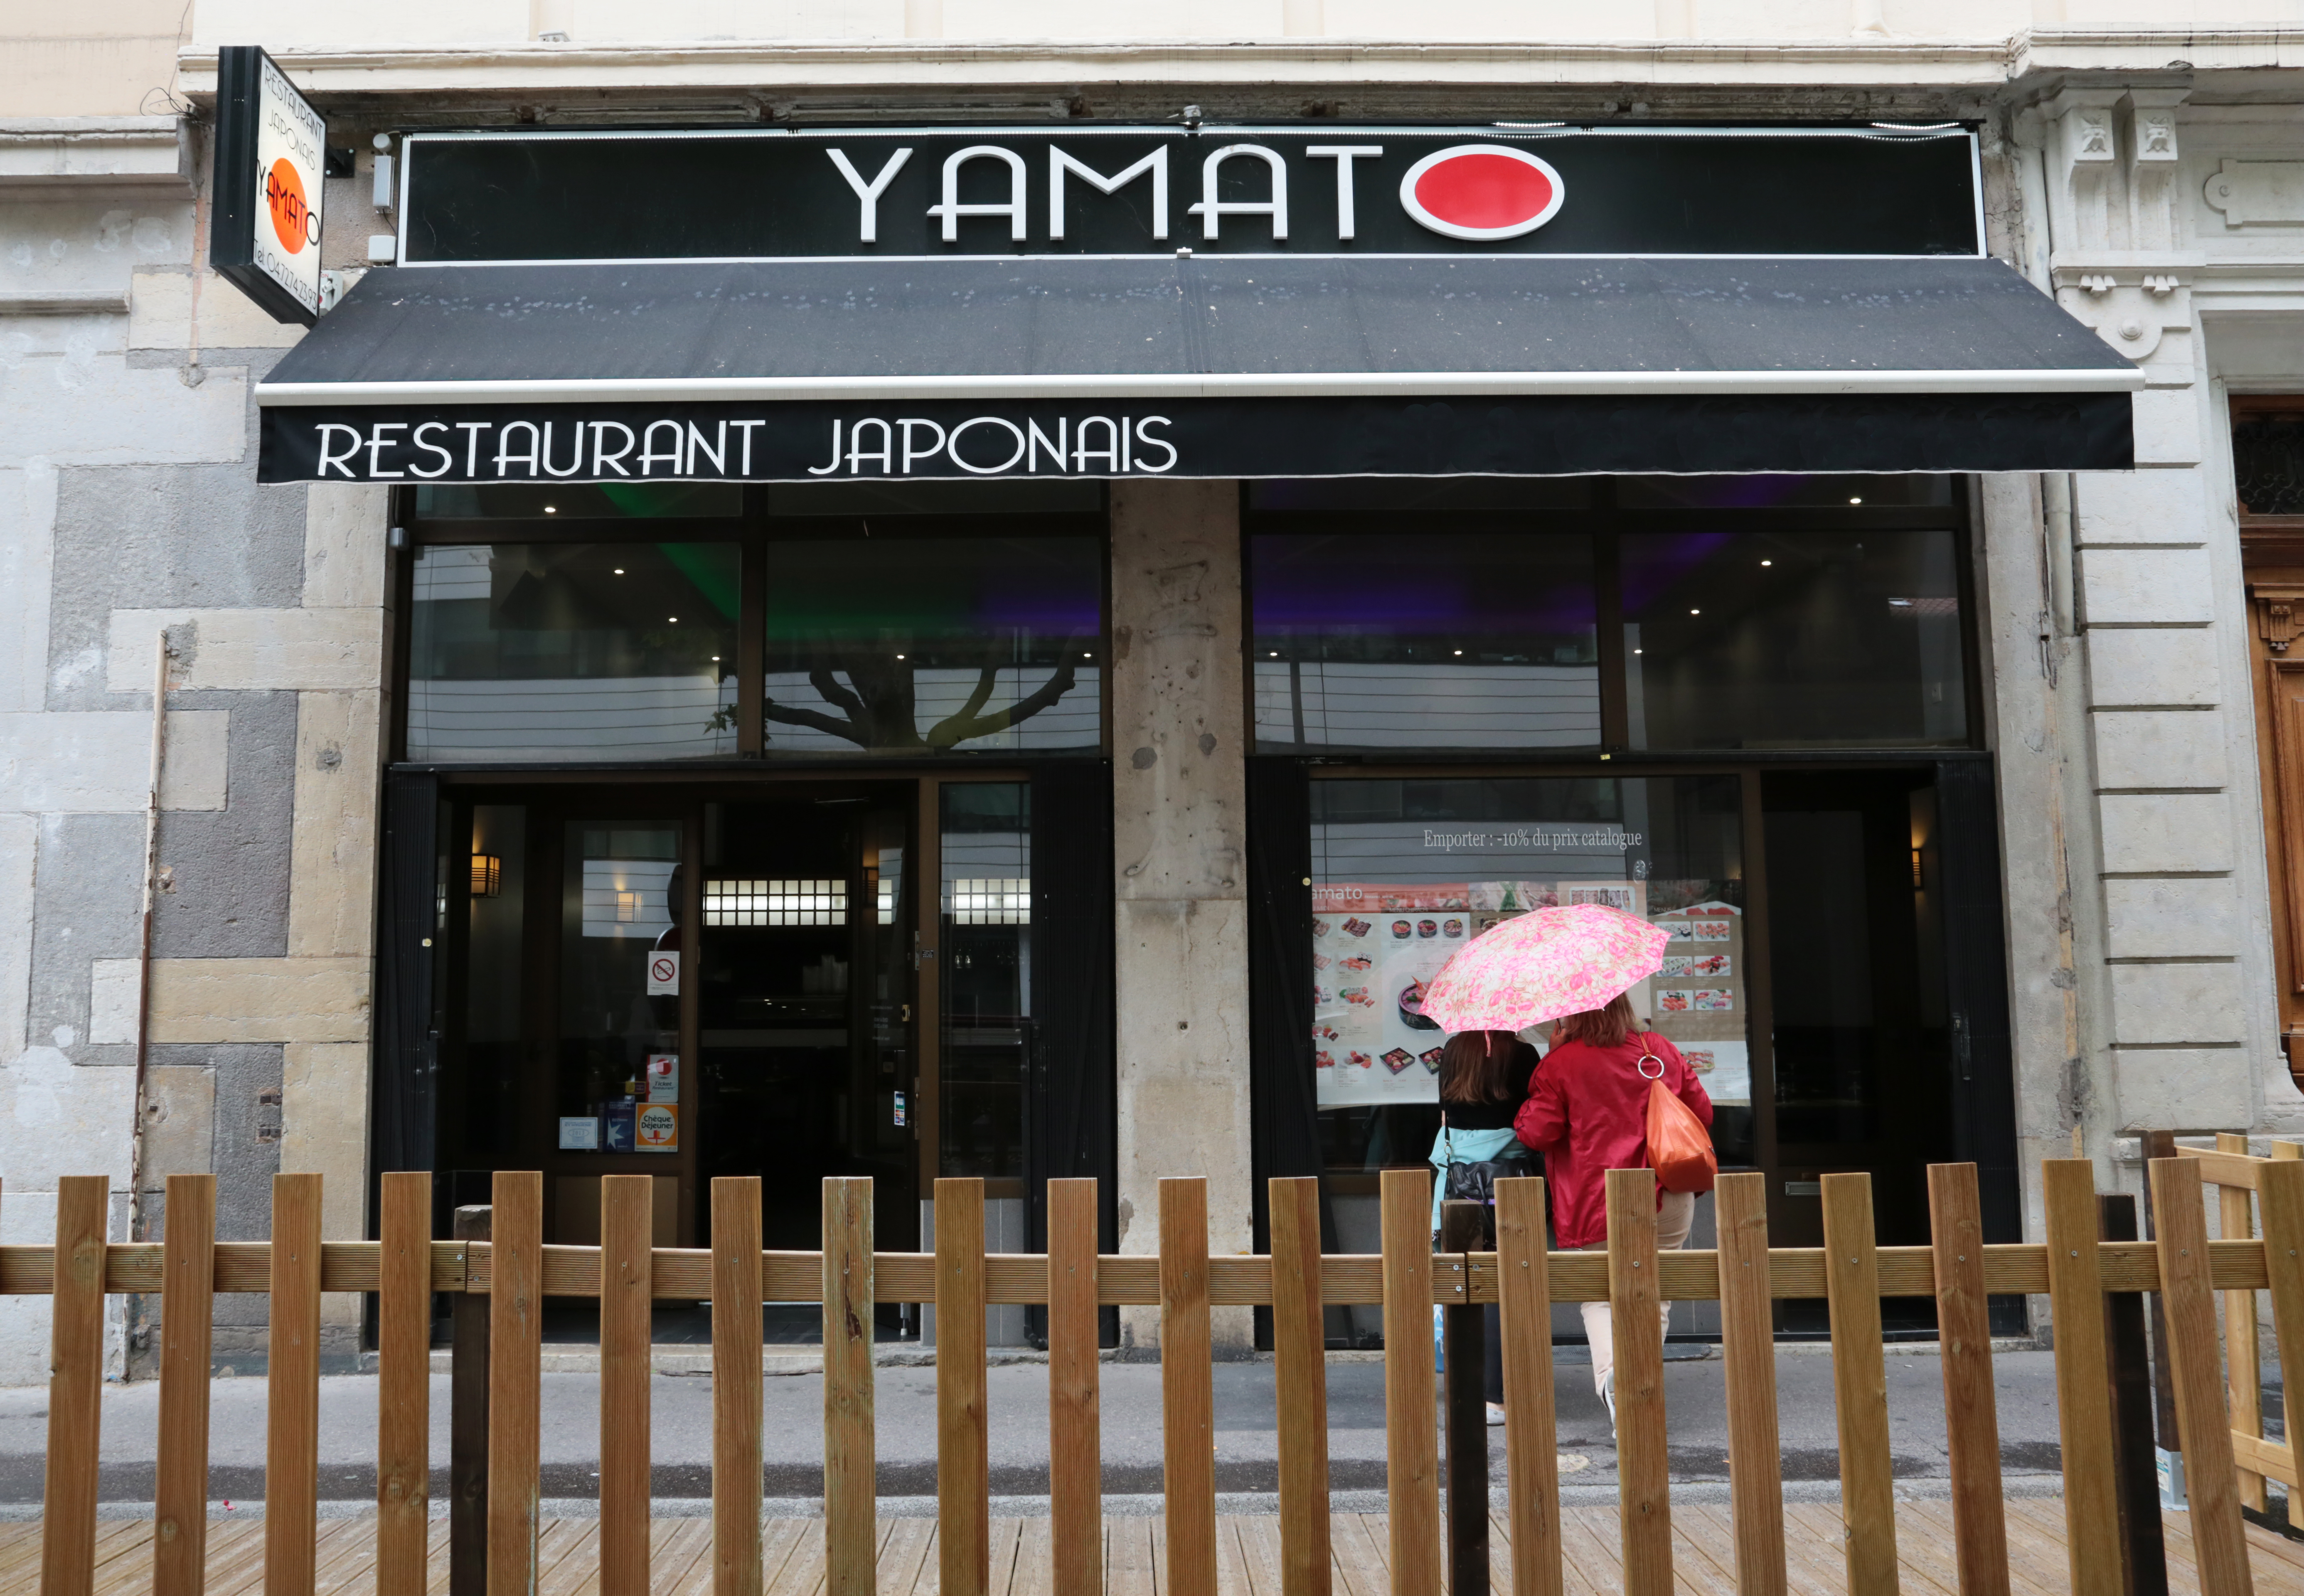 Bienvenue au restaurant Yamato - Yamato, Lyon